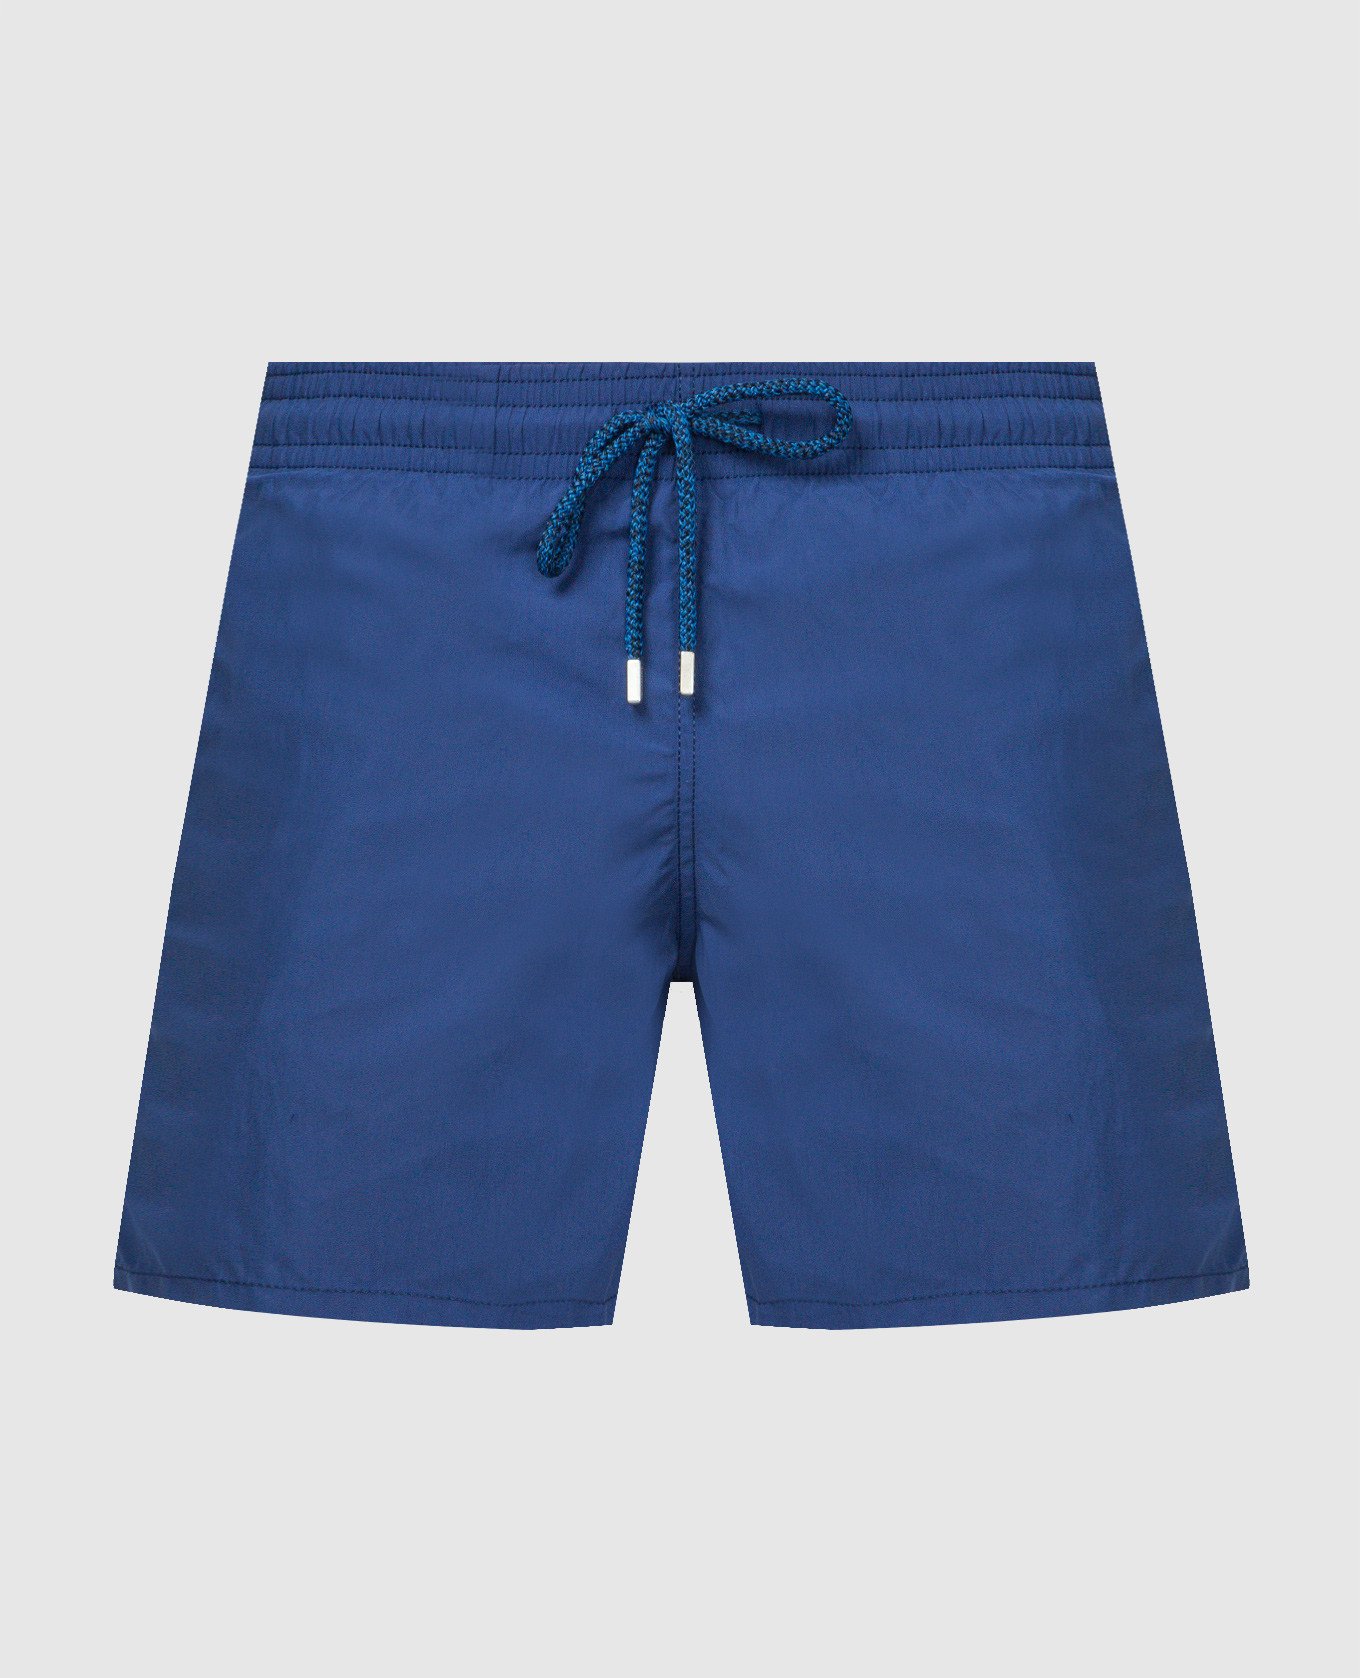 Blue swimming shorts